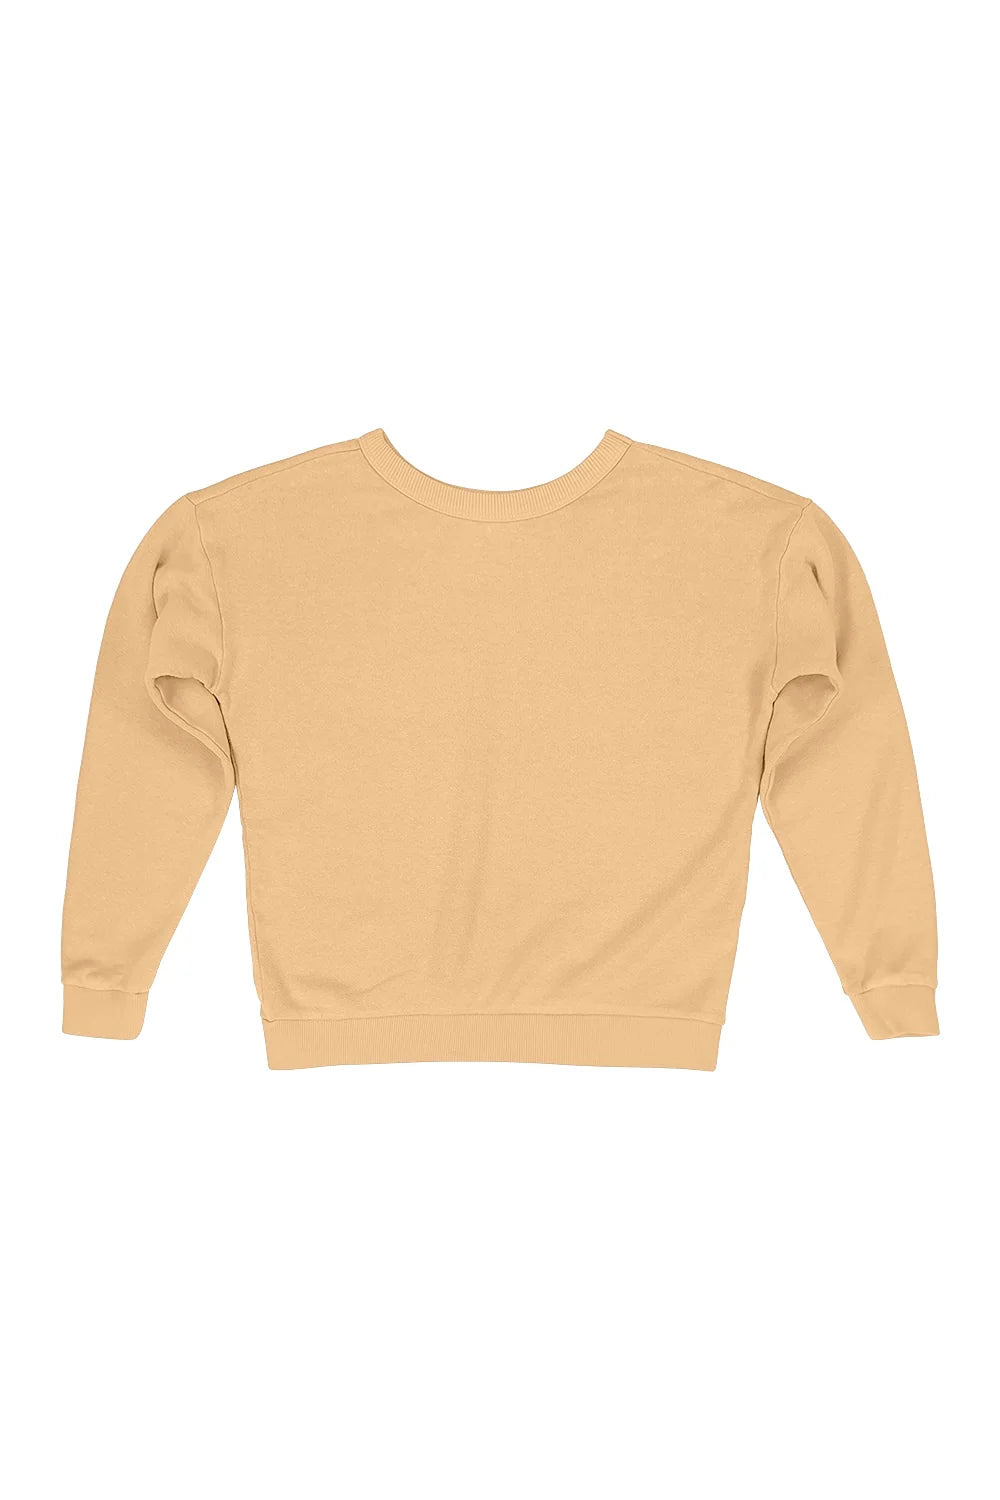 sweaters - JUNGMAVEN - Crux Crop Hemp Sweatshirt - PLENTY